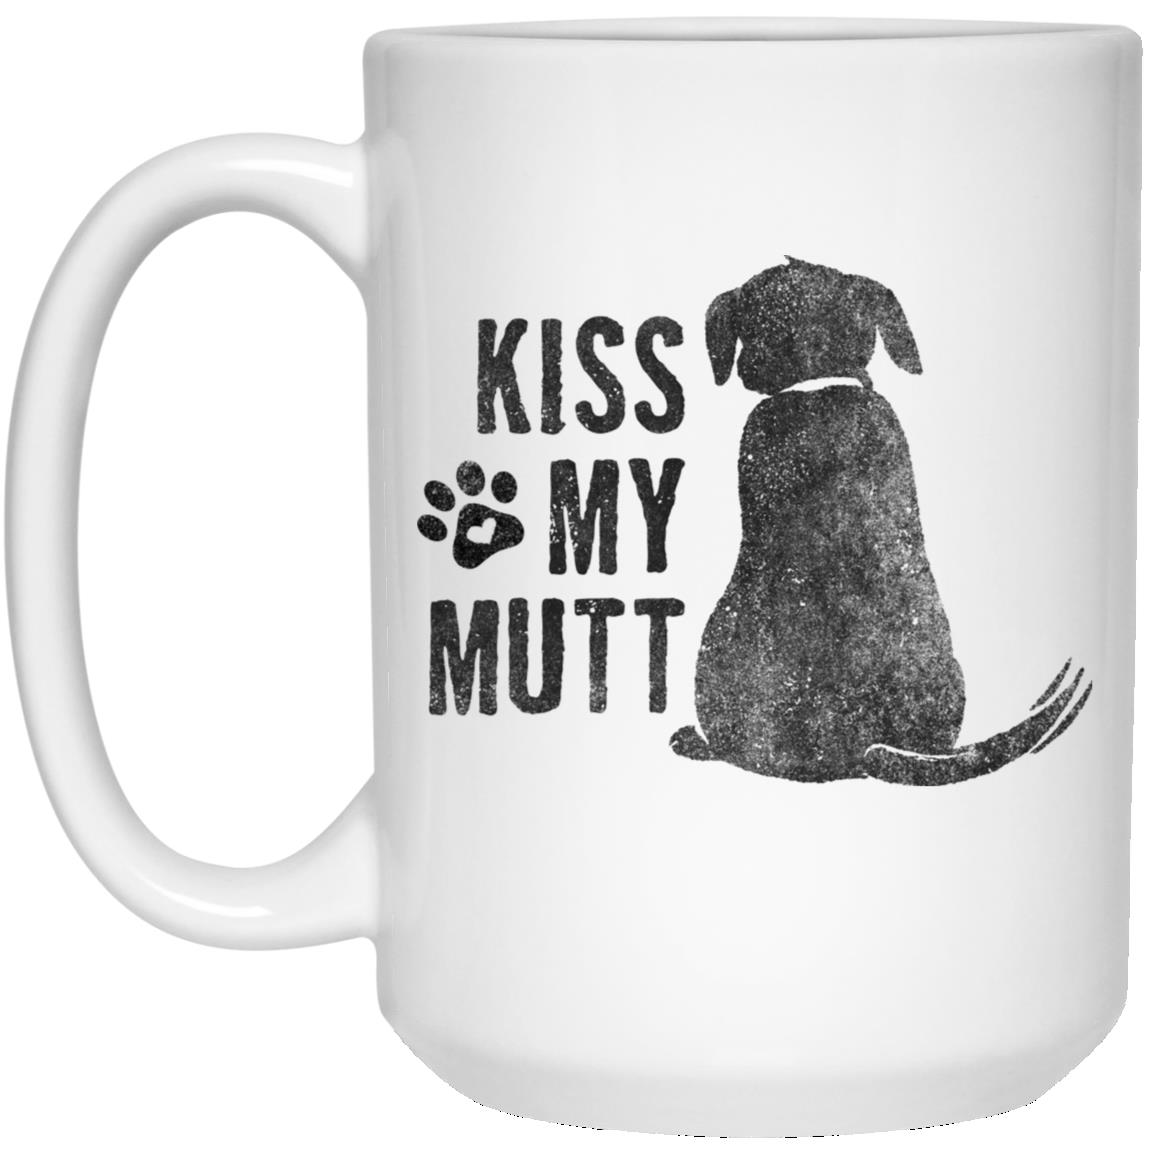 Kiss My Mutt Funny Mug- 15 oz.- Super Deal $ 7.99